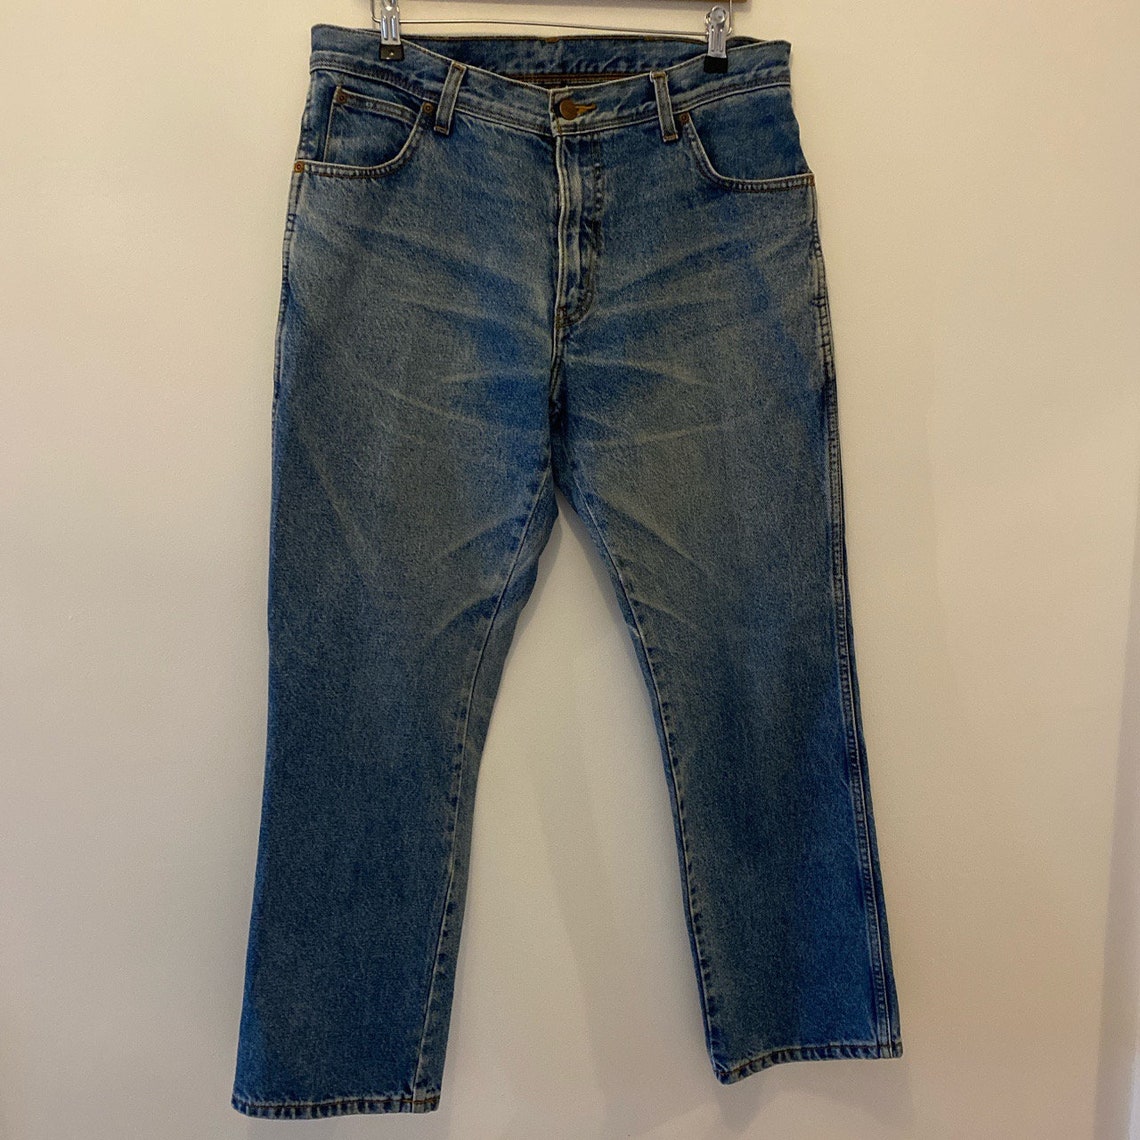 Vintage Wrangler Jeans | Etsy